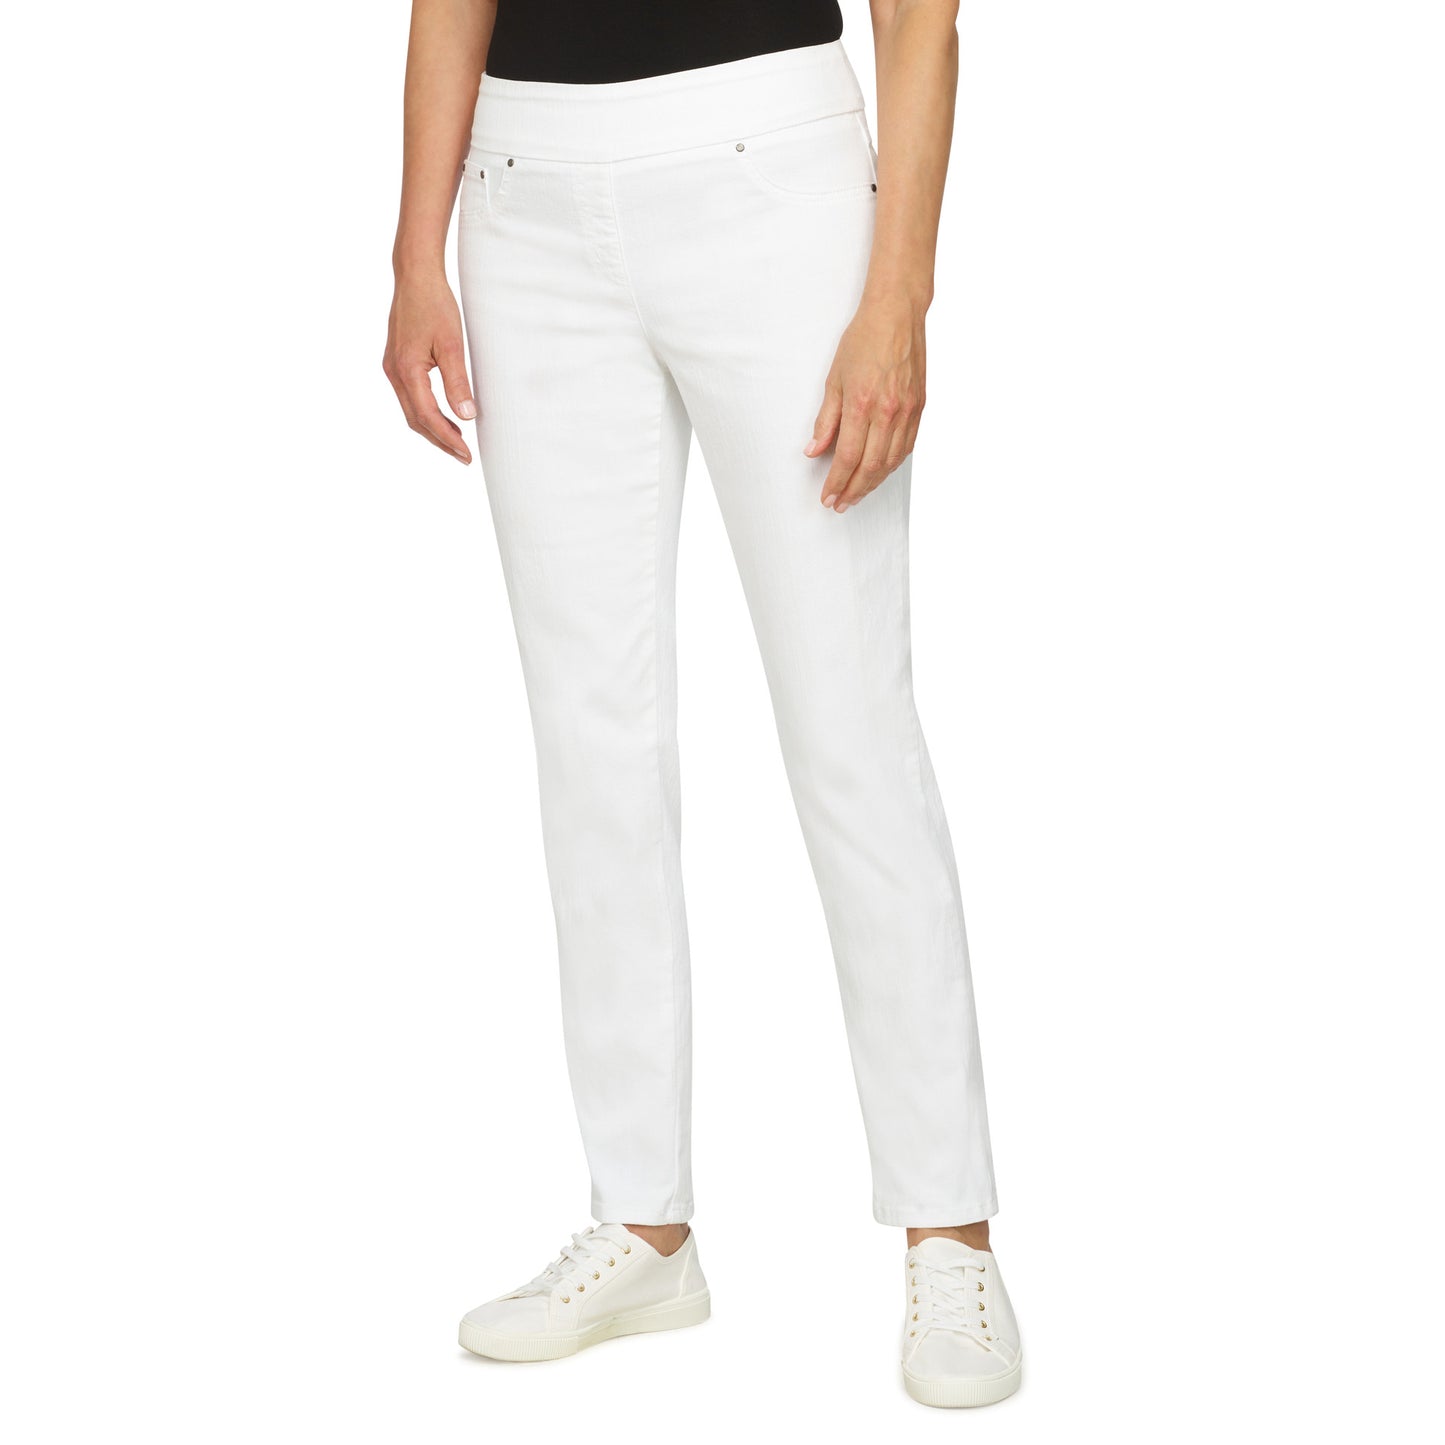 036- Ruby Road White Petite Stretch Faux Pocket Jeans